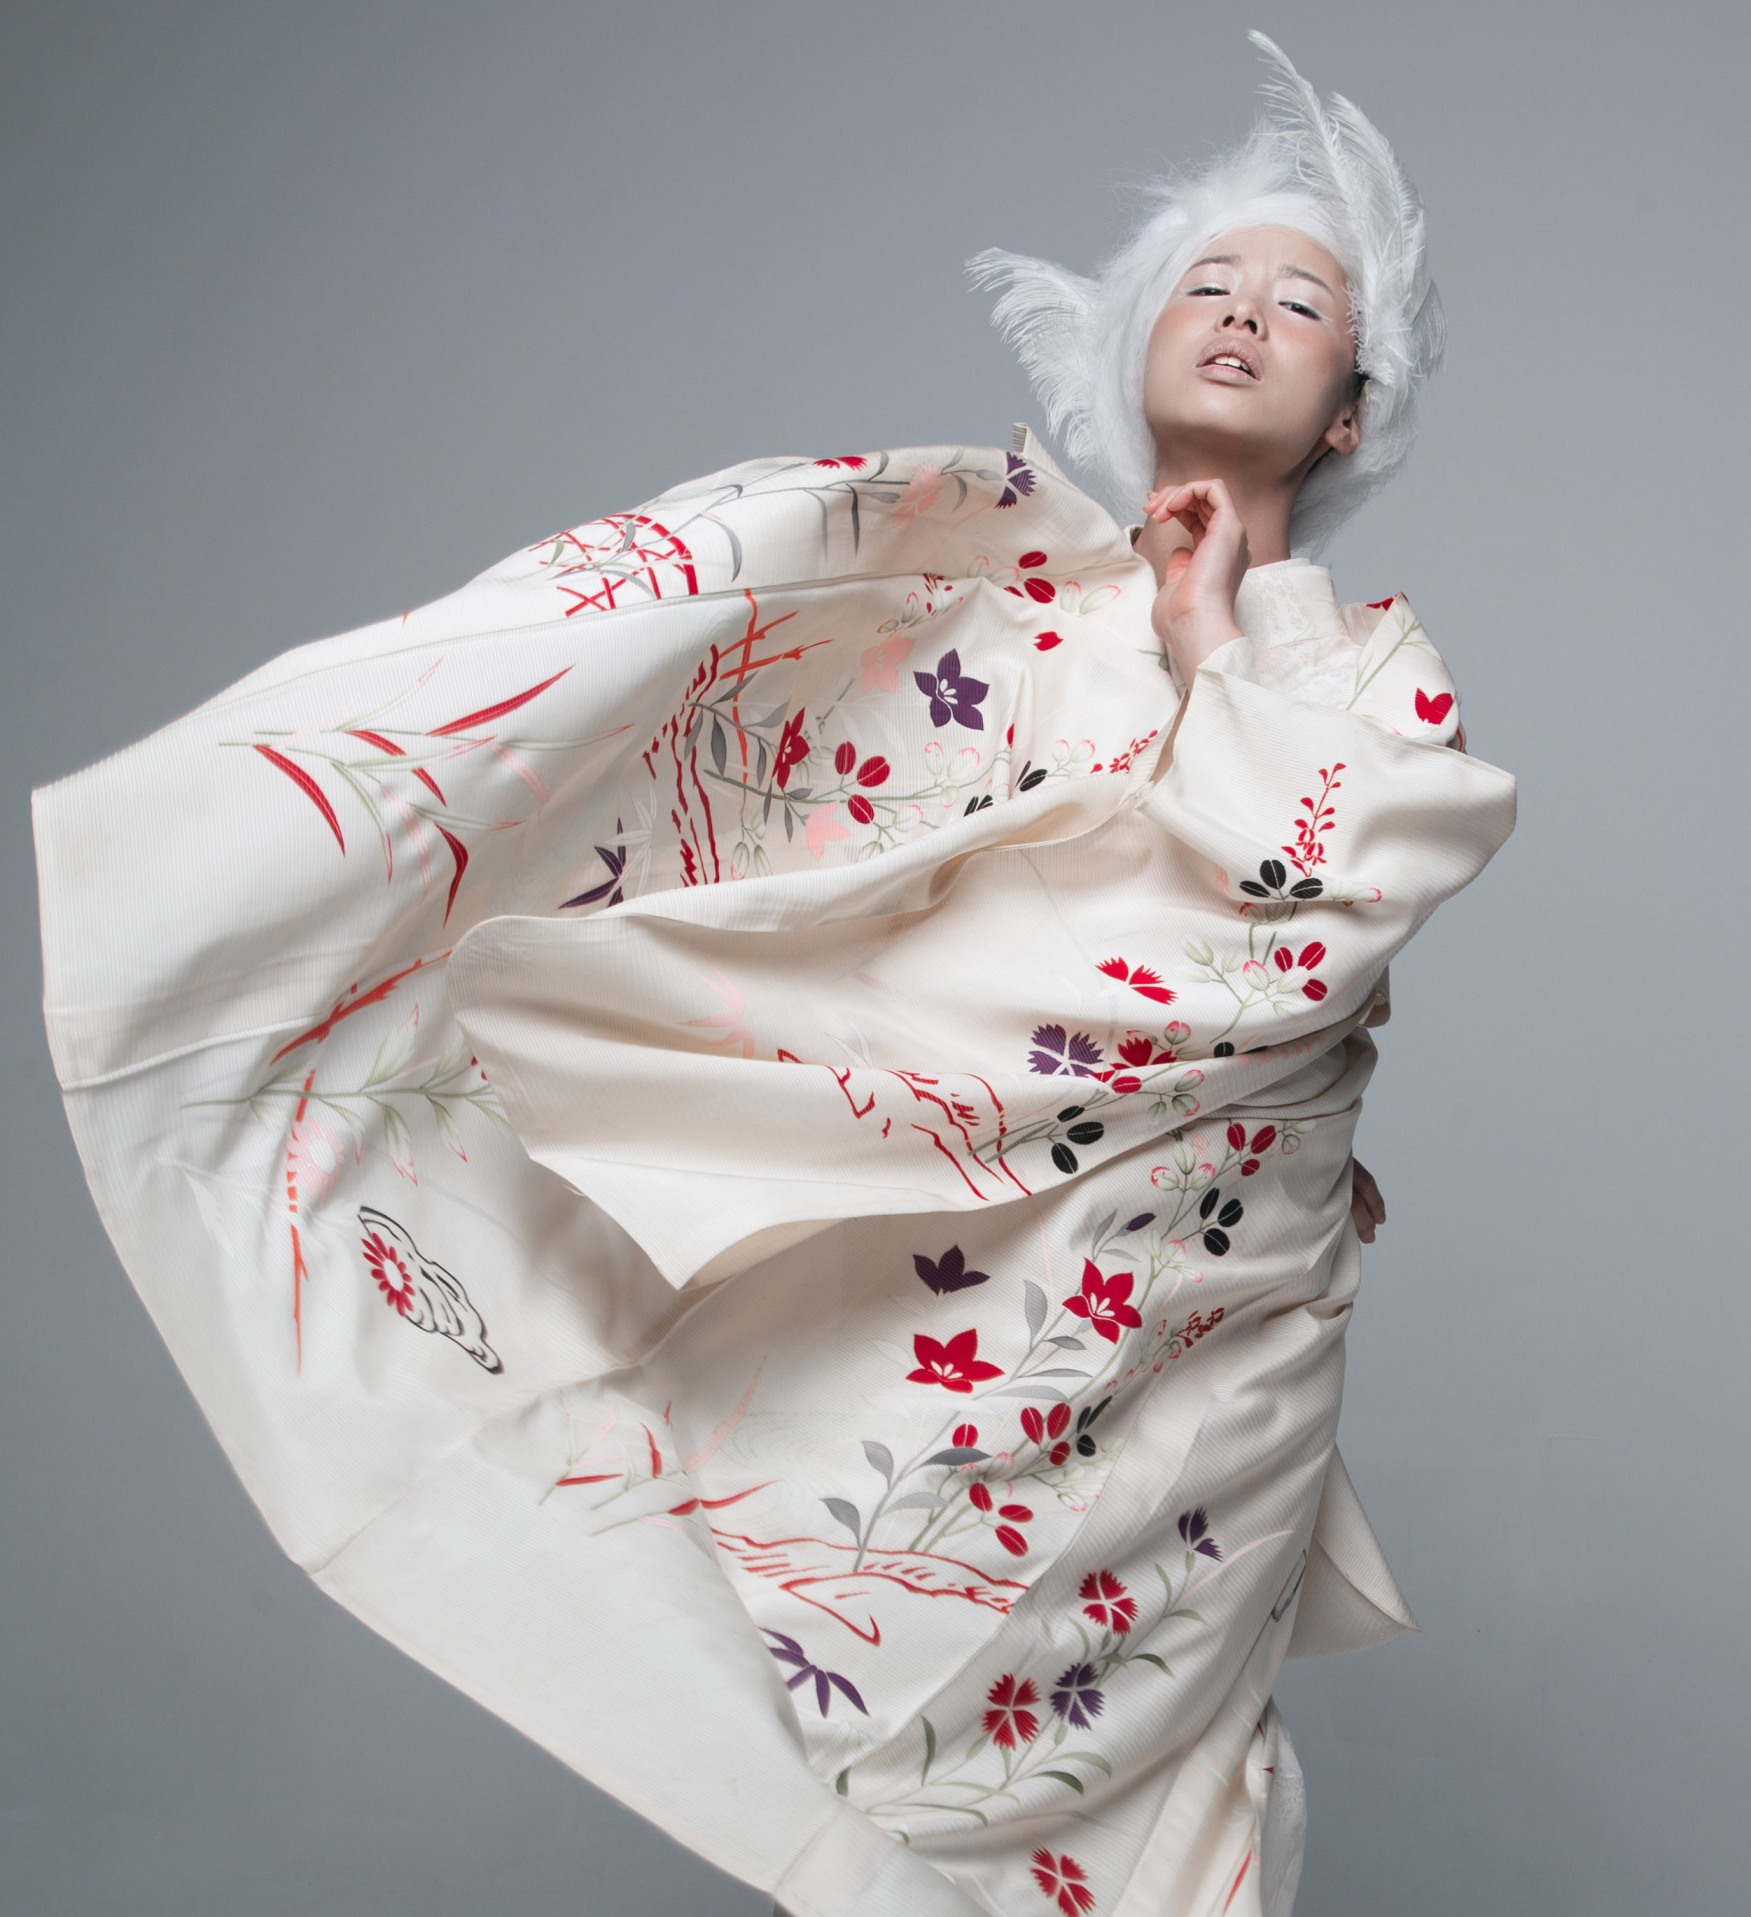 Gallery | Uber Dandy Kimono through photoshoots.